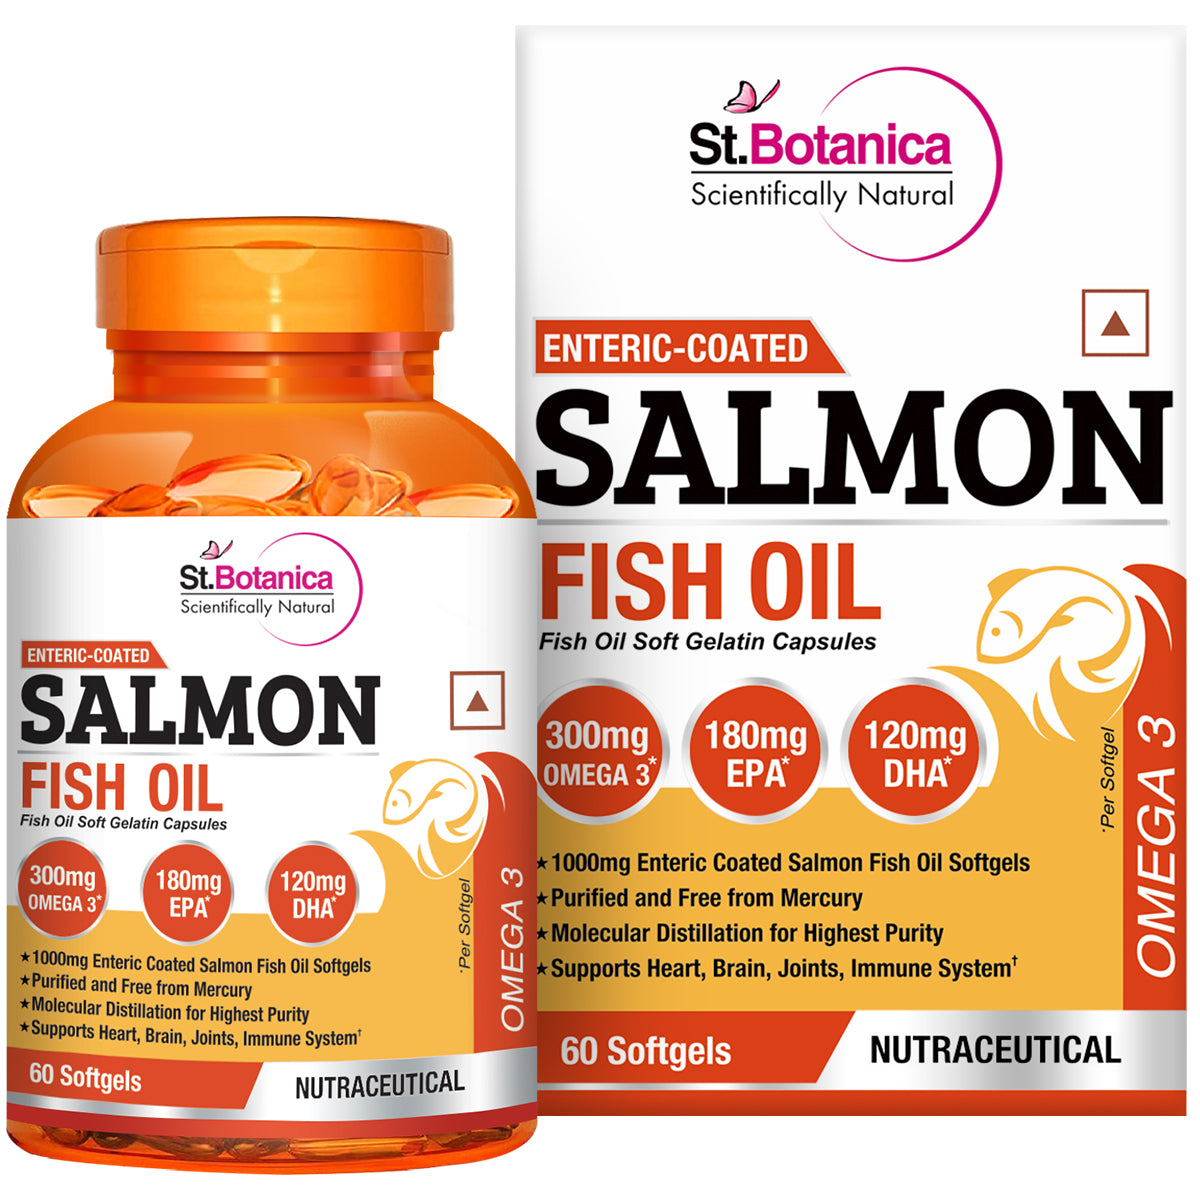 St.Botanica Salmon Fish Oil 1000mg; 300mg Omega-3 with 180mg EPA, 120mg DHA - 60 Enteric Coated Softgels